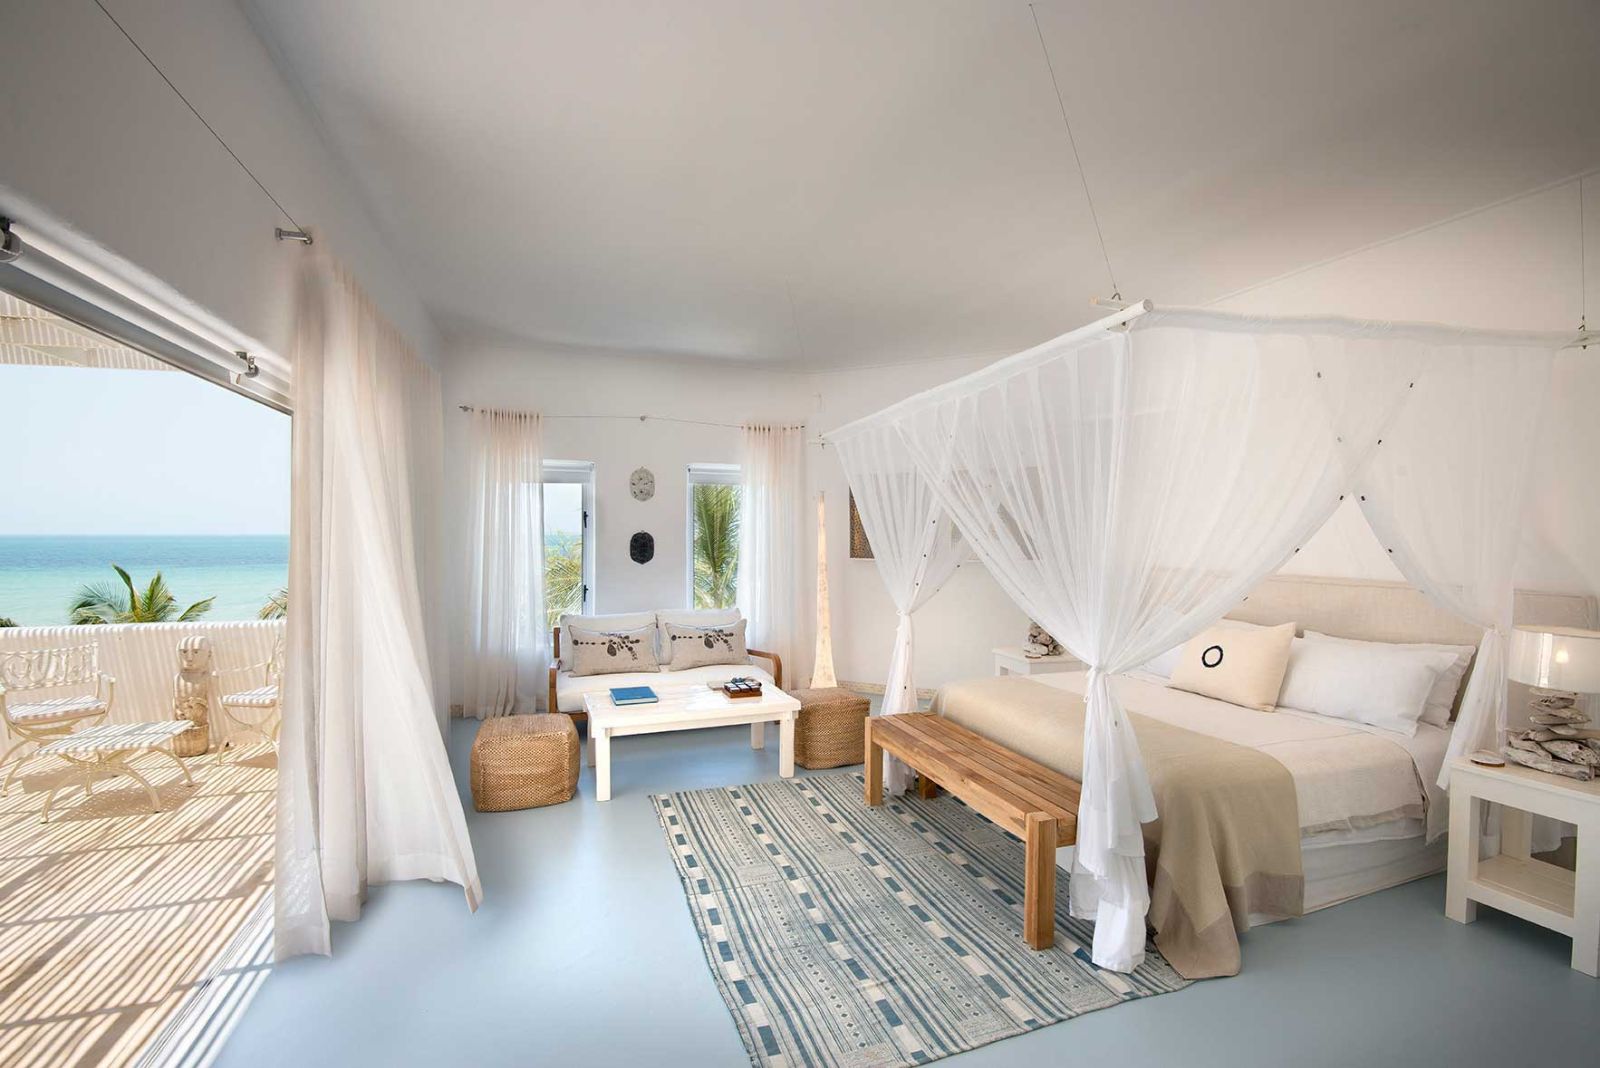 Bazaruto Suite at Santorin resort on Mozambique's south coast